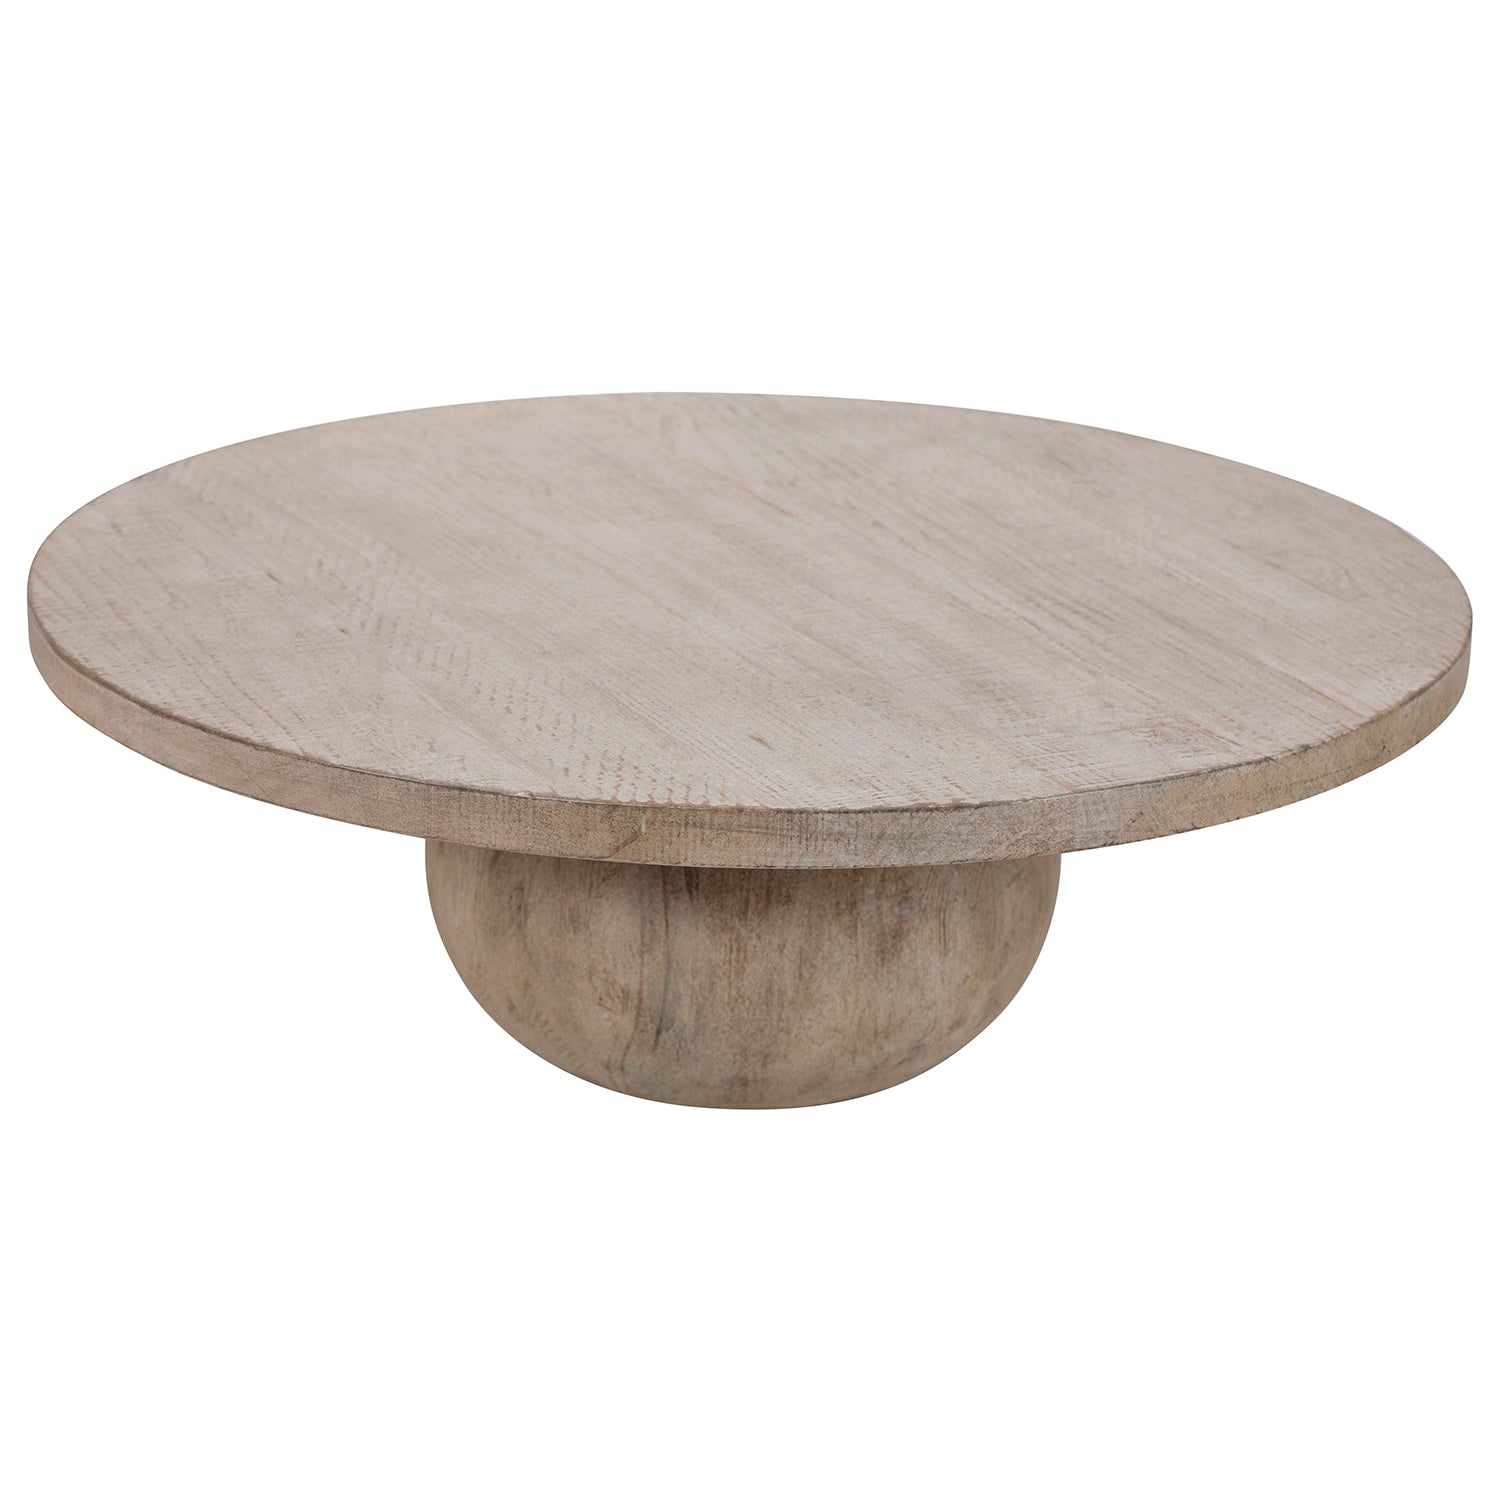 Sophia Round Ball Base Coffee Table – Paynes Gray